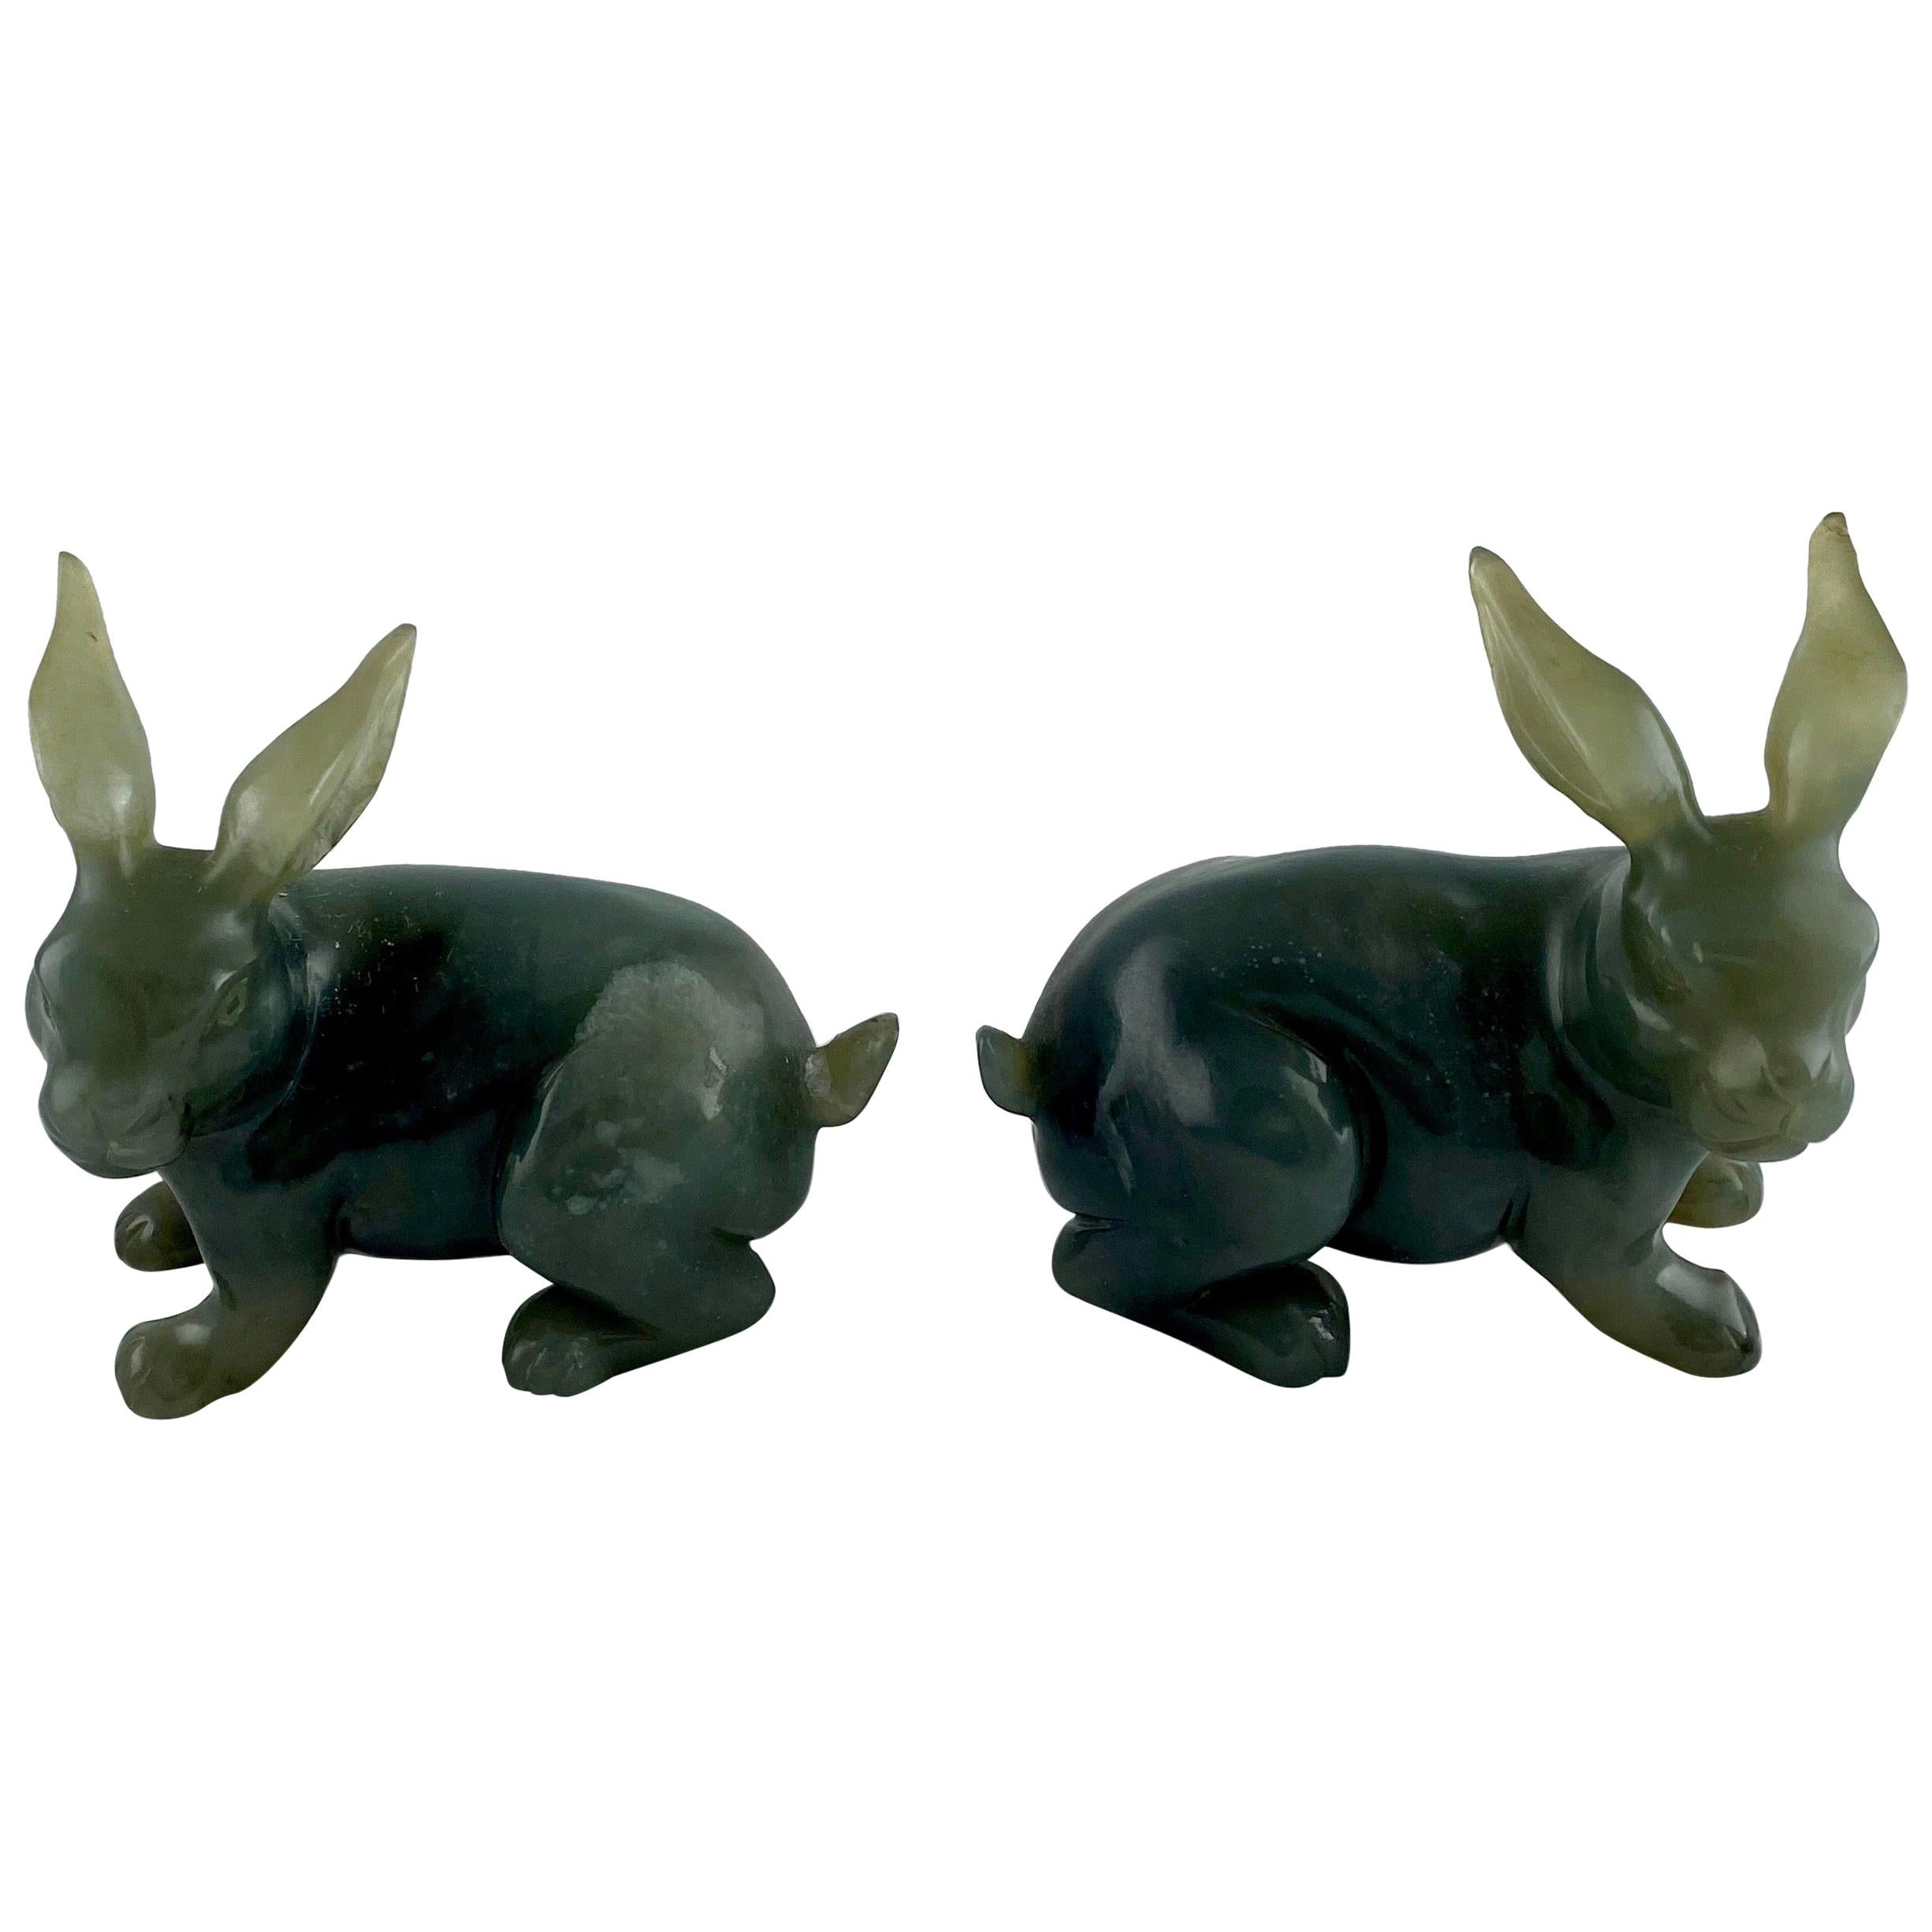 Pair of Hard Stone Rabbits, China, 20th C